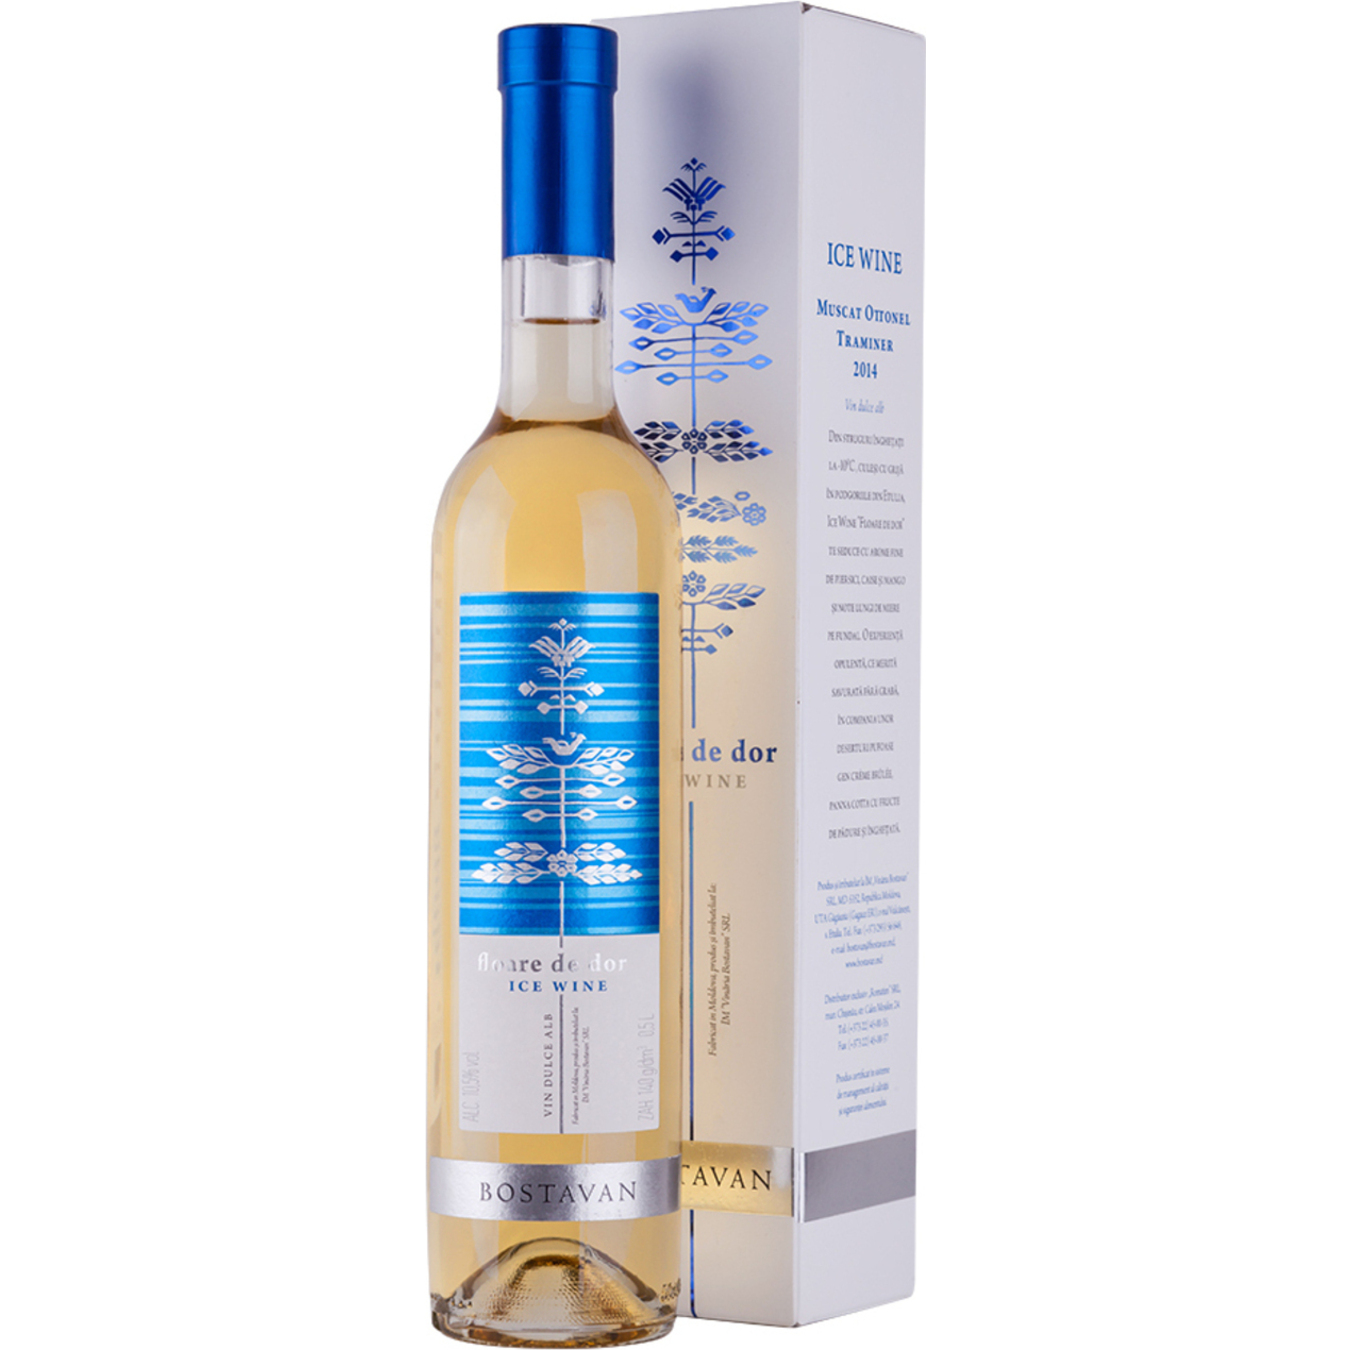 Вино Bostavan Floar de Dor Ice Wine Muscat Ottonel-Traminer біле сухе 13,3% 0,5л